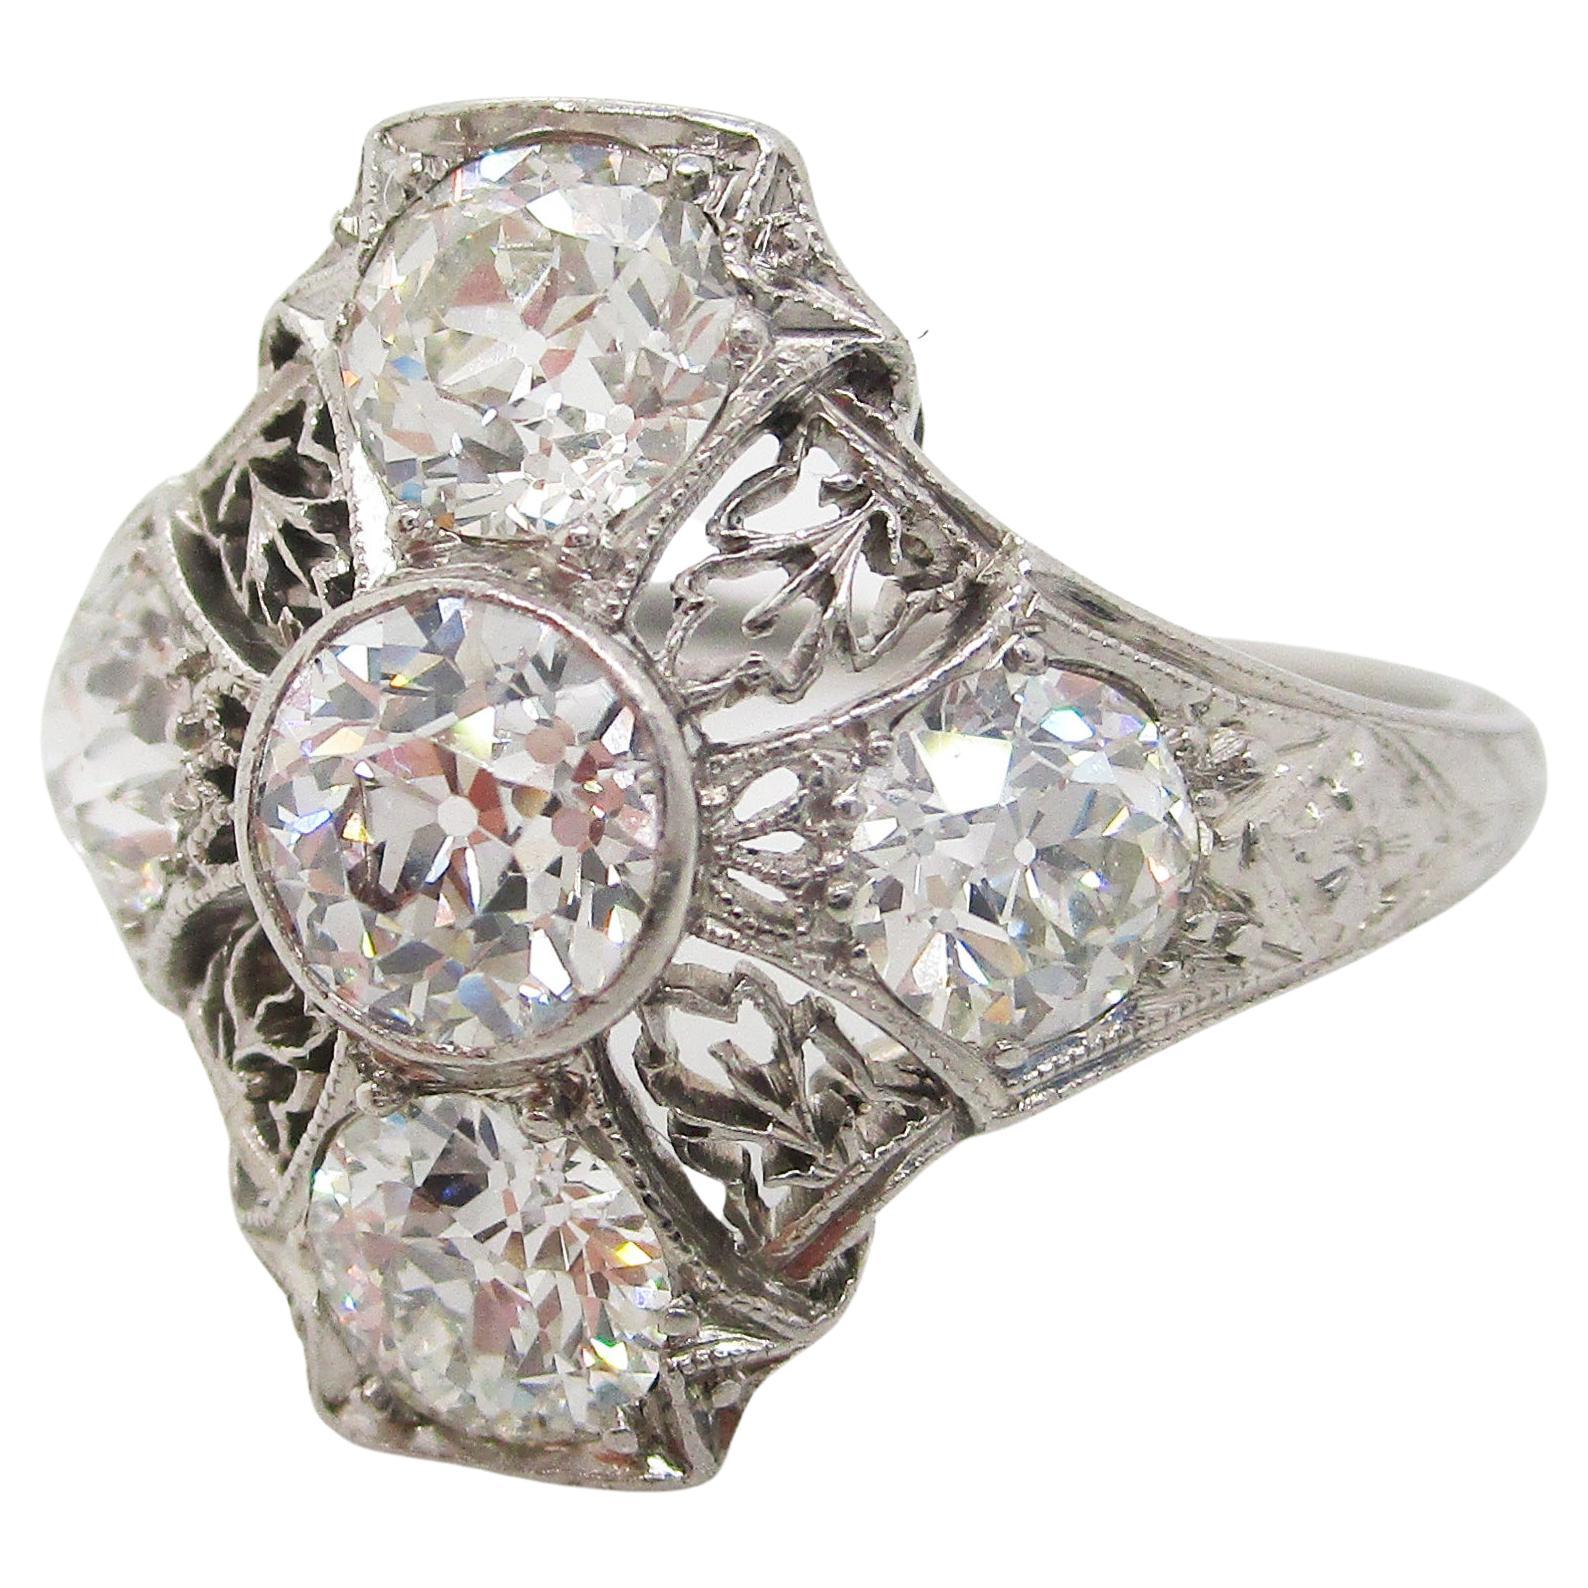 Deco Platinum Filigree 3 Cts. of European Cut Diamond Ring Size 8.5 For Sale